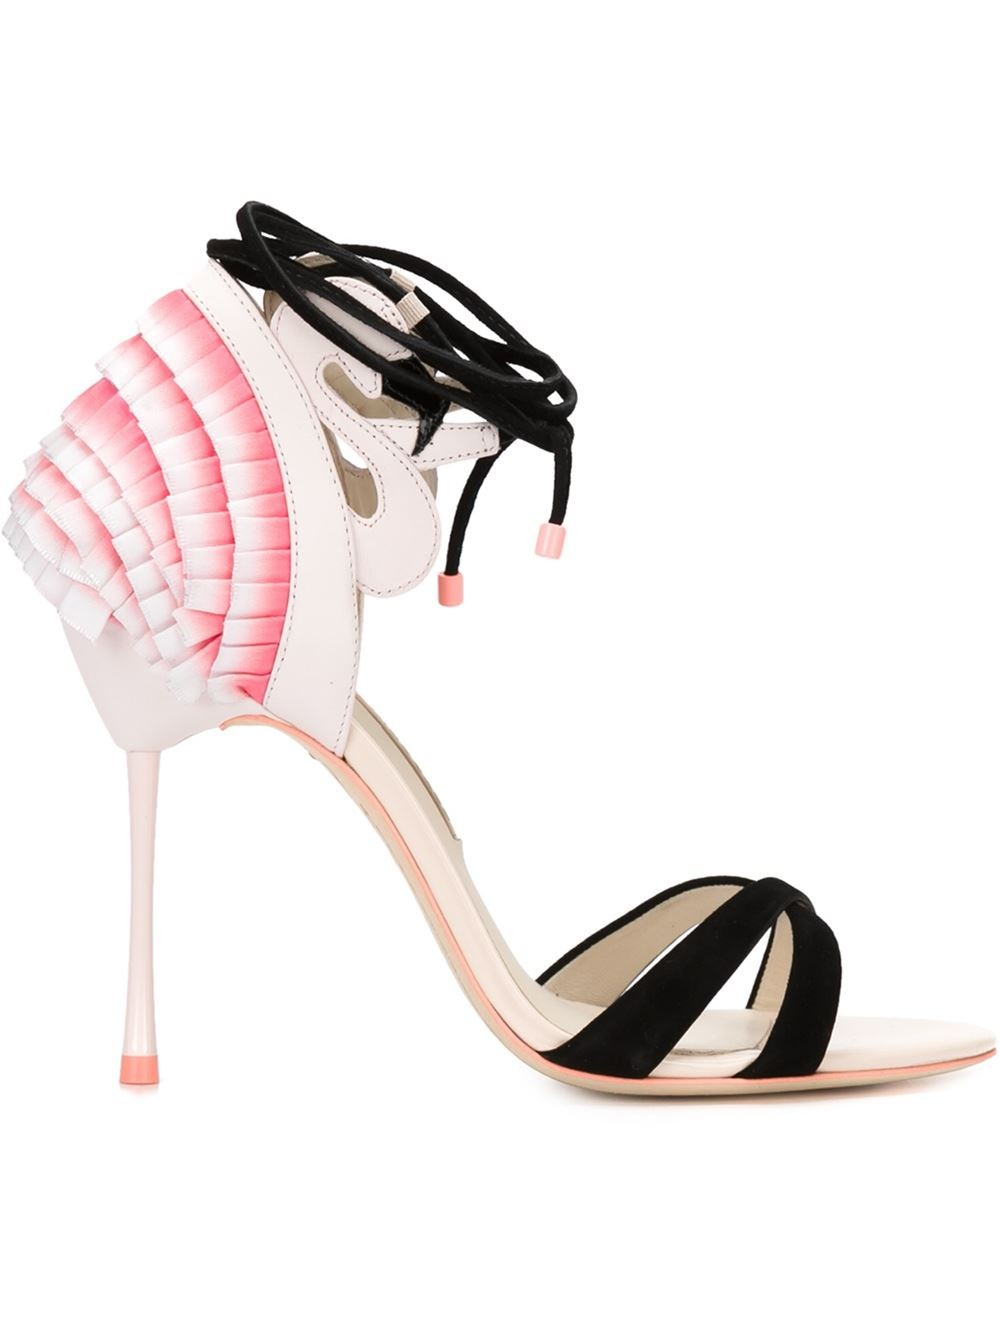 Sophia webster 'flamingo Frill' Sandals in Black | Lyst